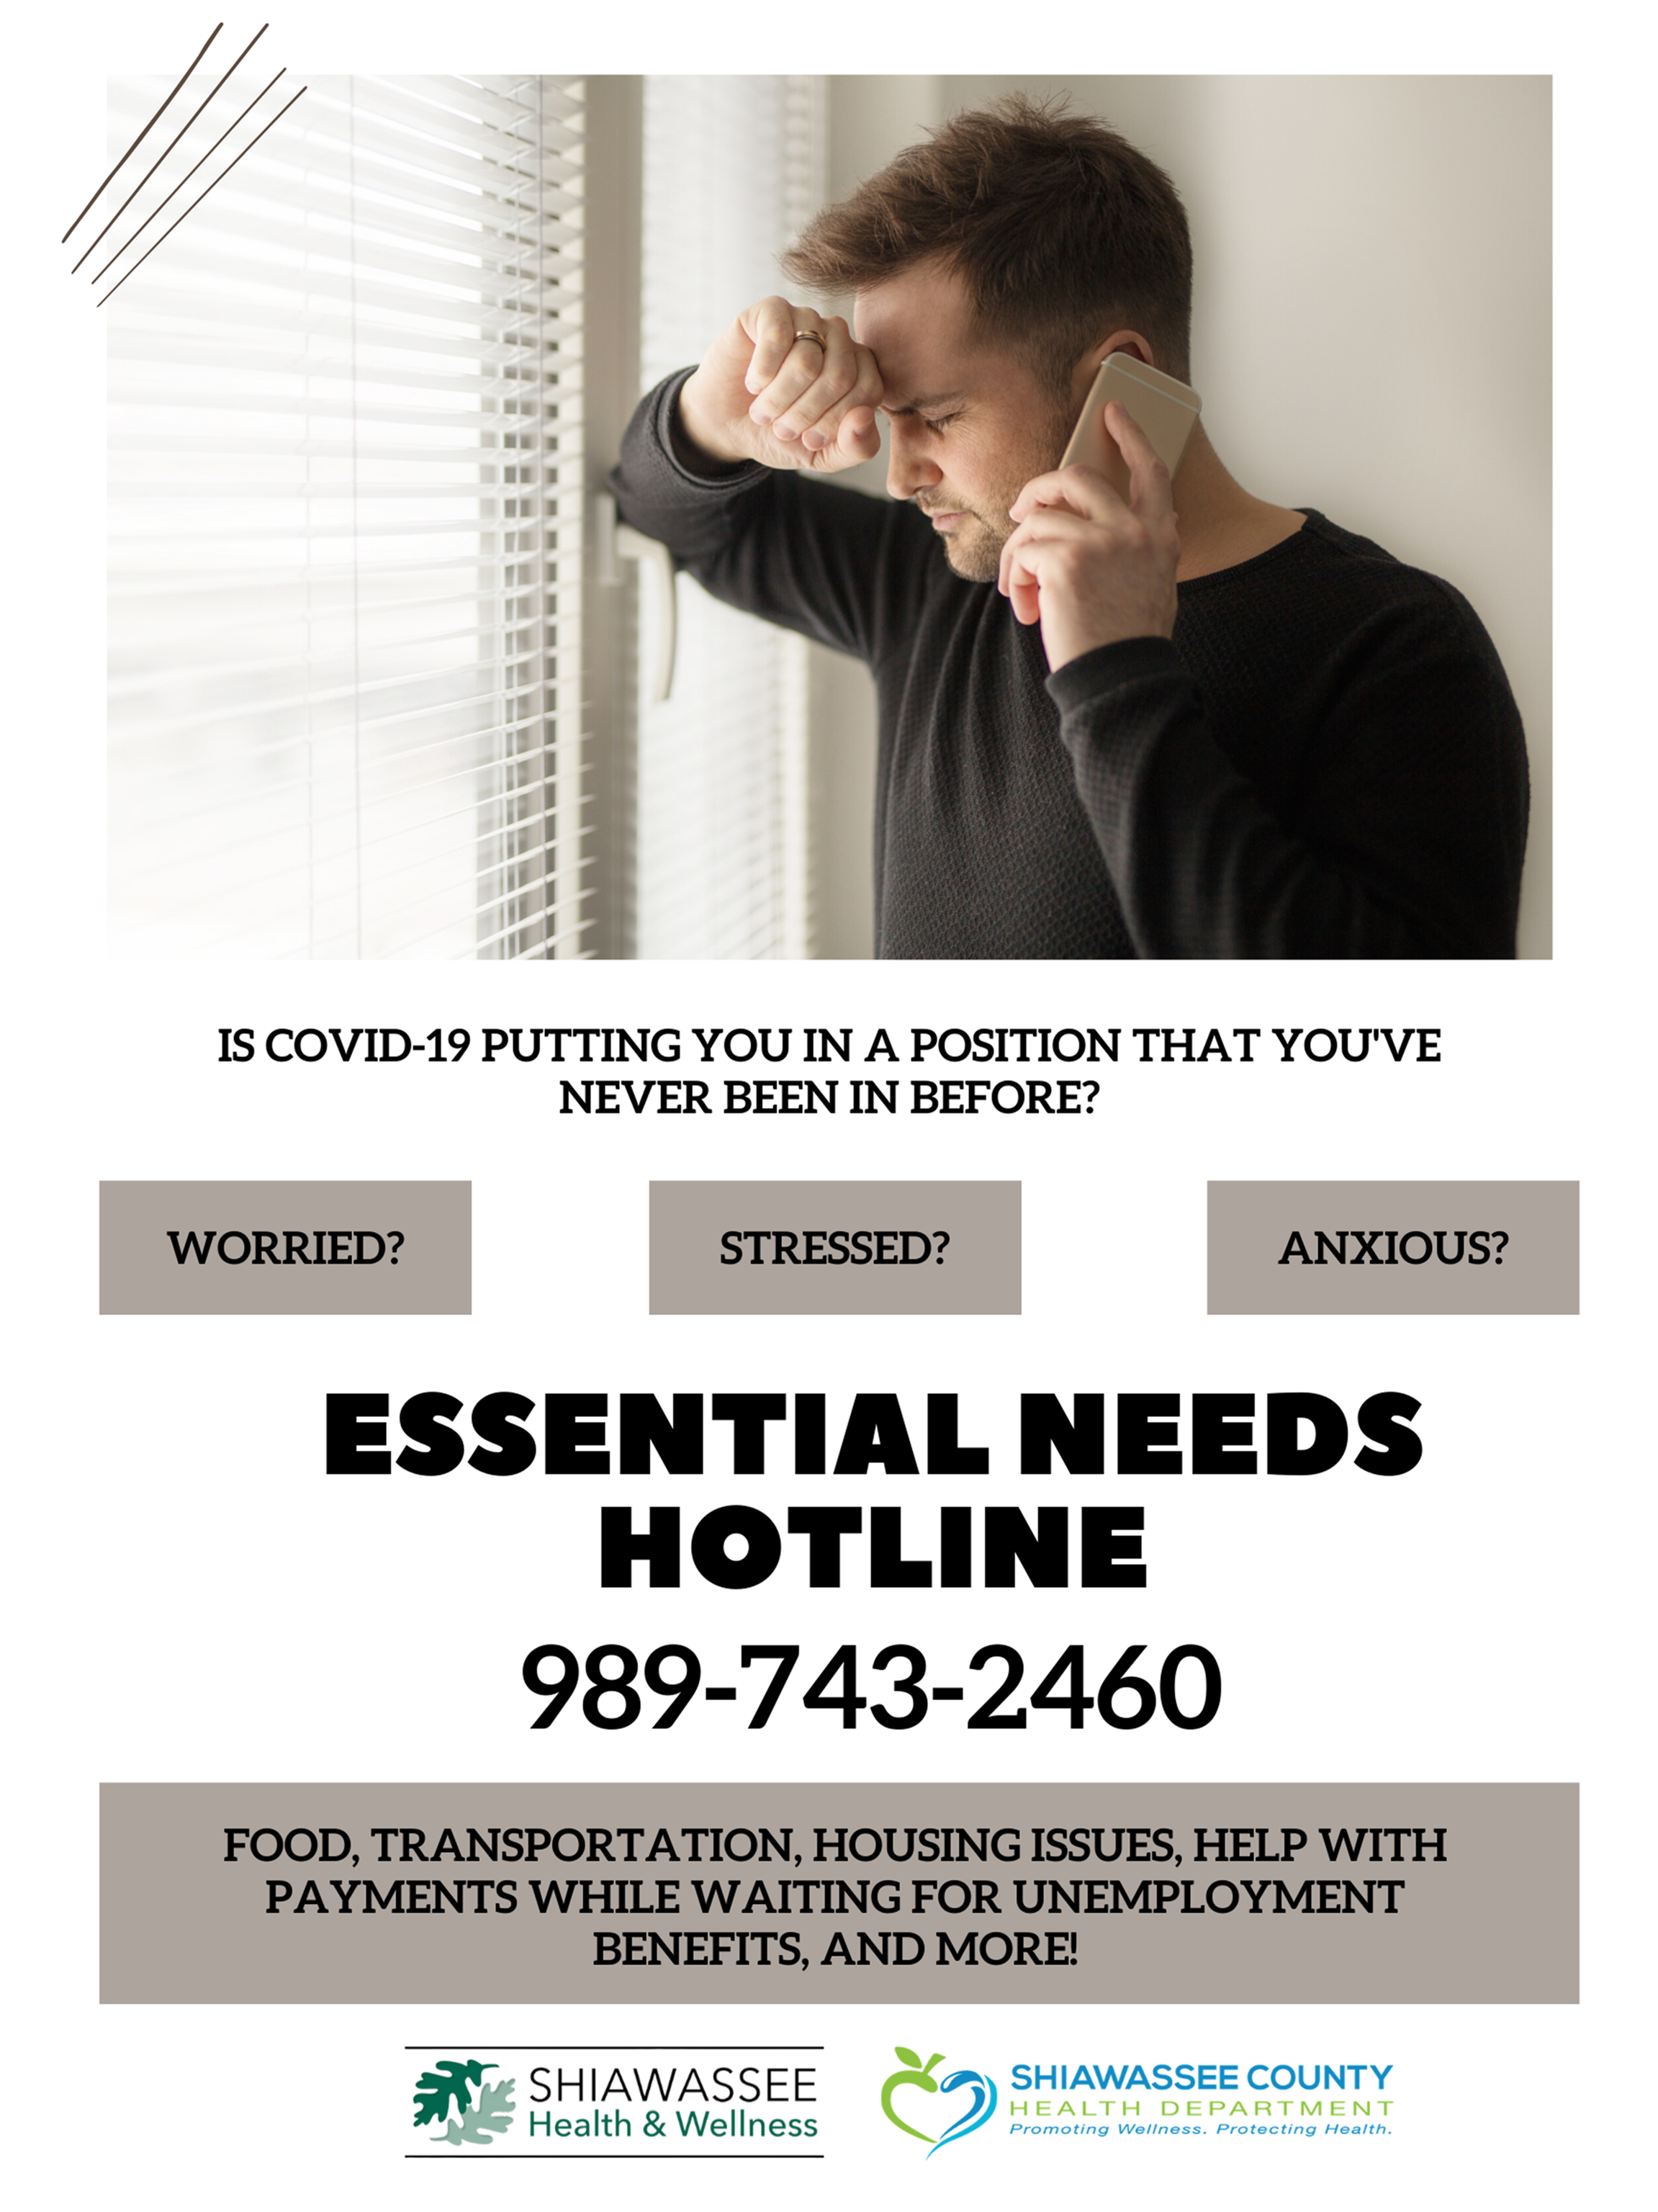 If you need help...call 989-743-2460